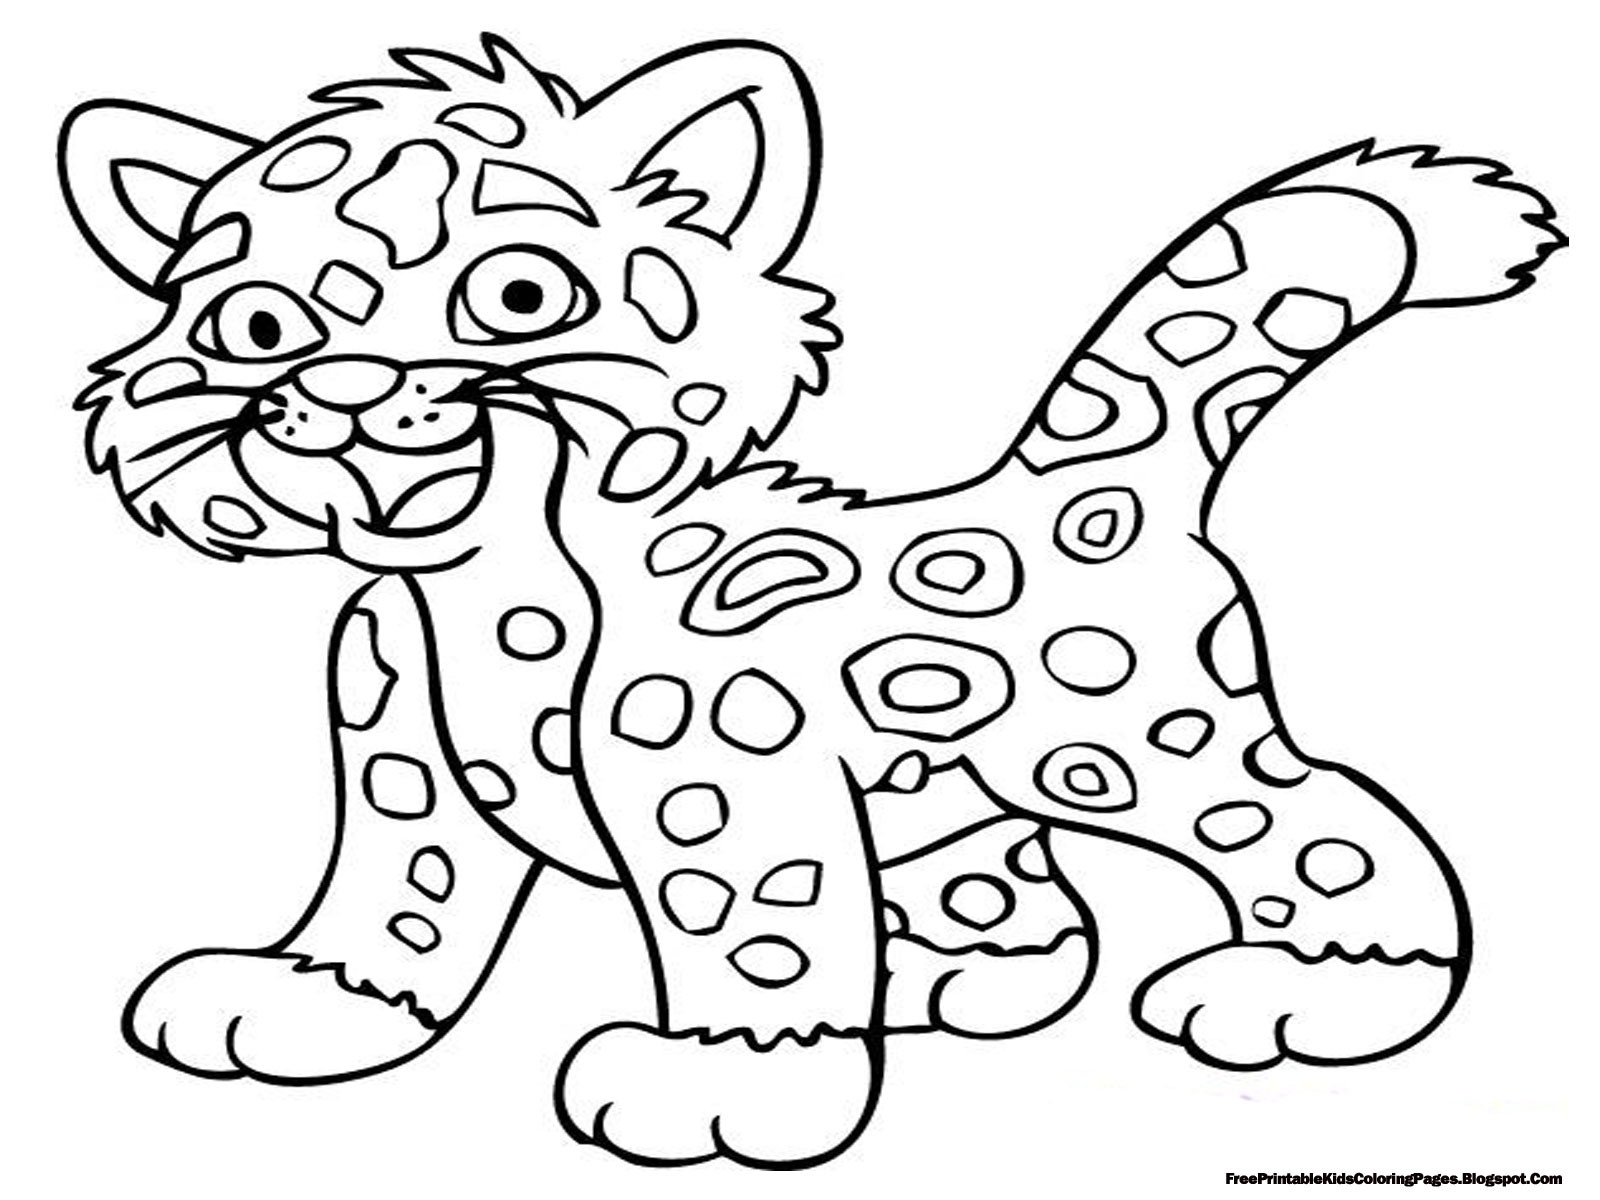 Printable Animal Coloring Pages
 Jaguar Coloring Pages Free Printable Kids Coloring Pages